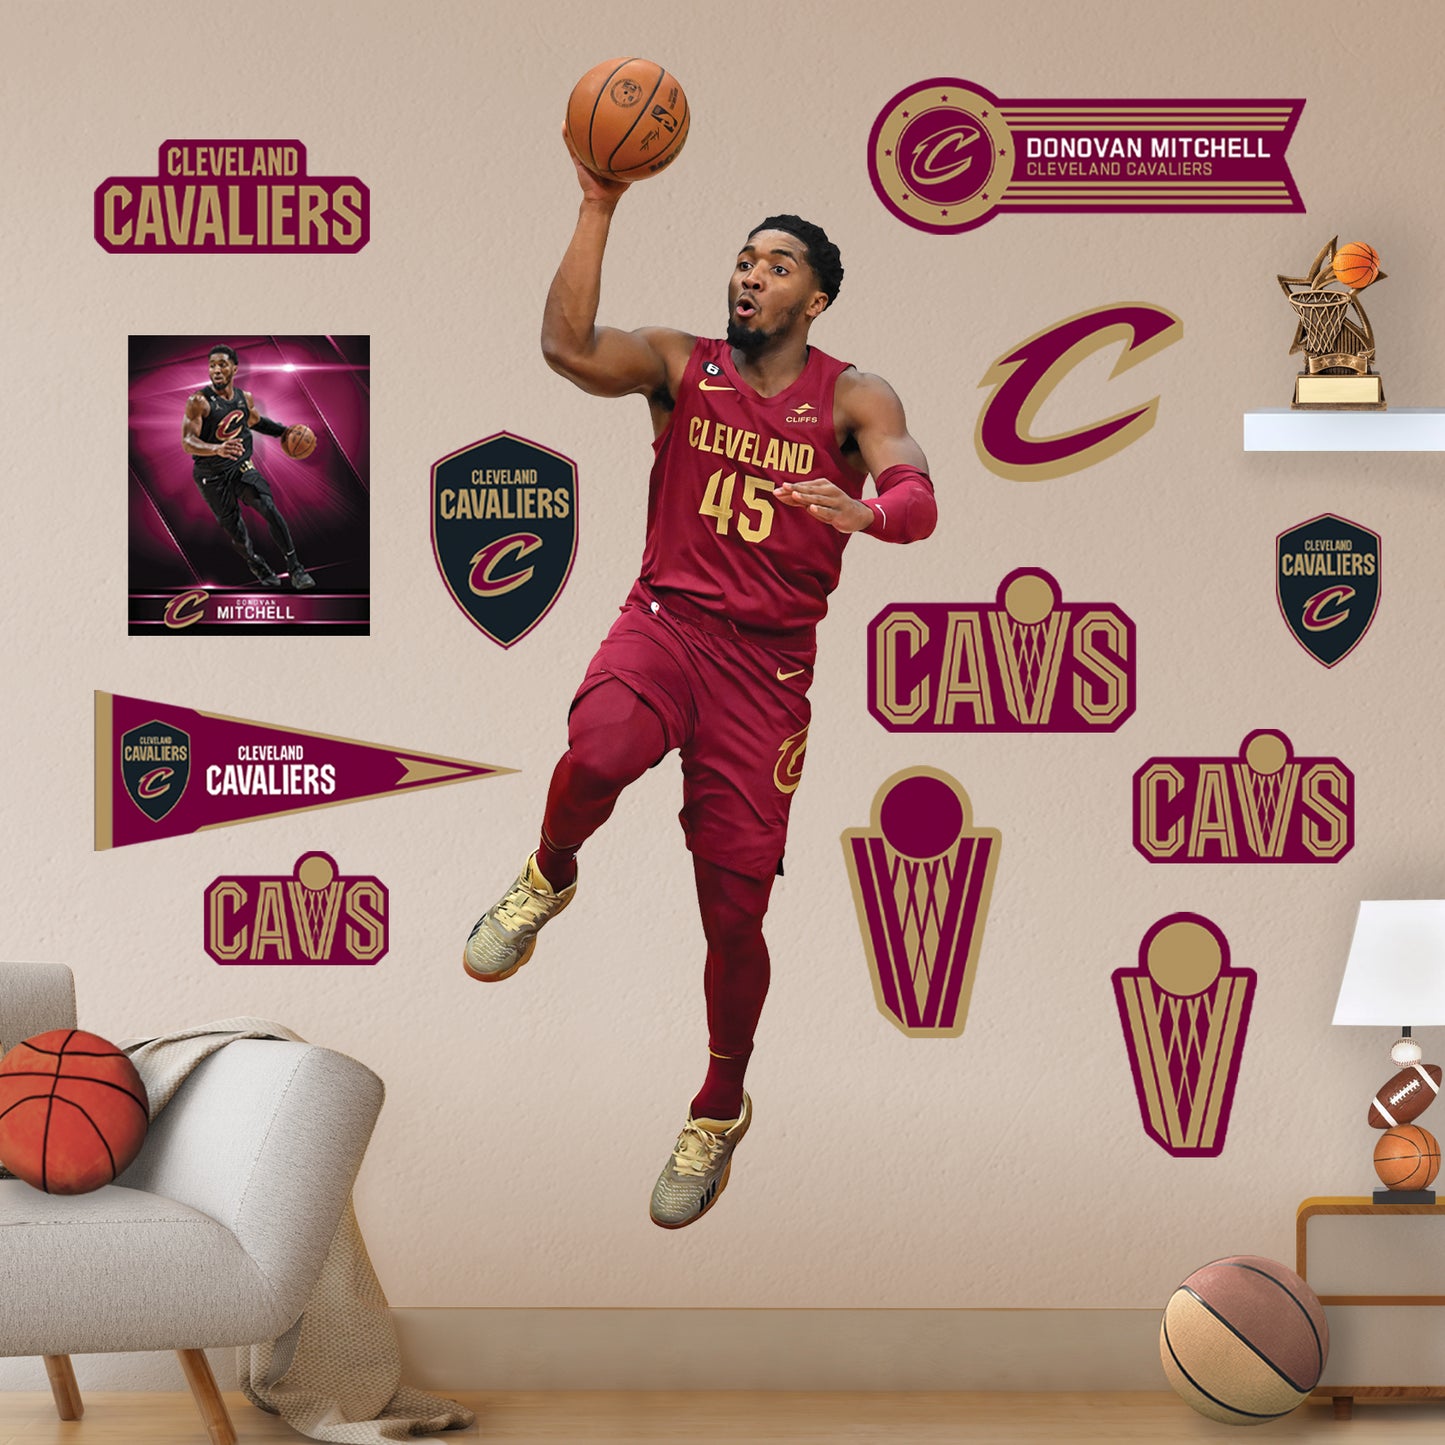 Official Cleveland Cavaliers Apparel, Cavaliers Gear, Cavaliers